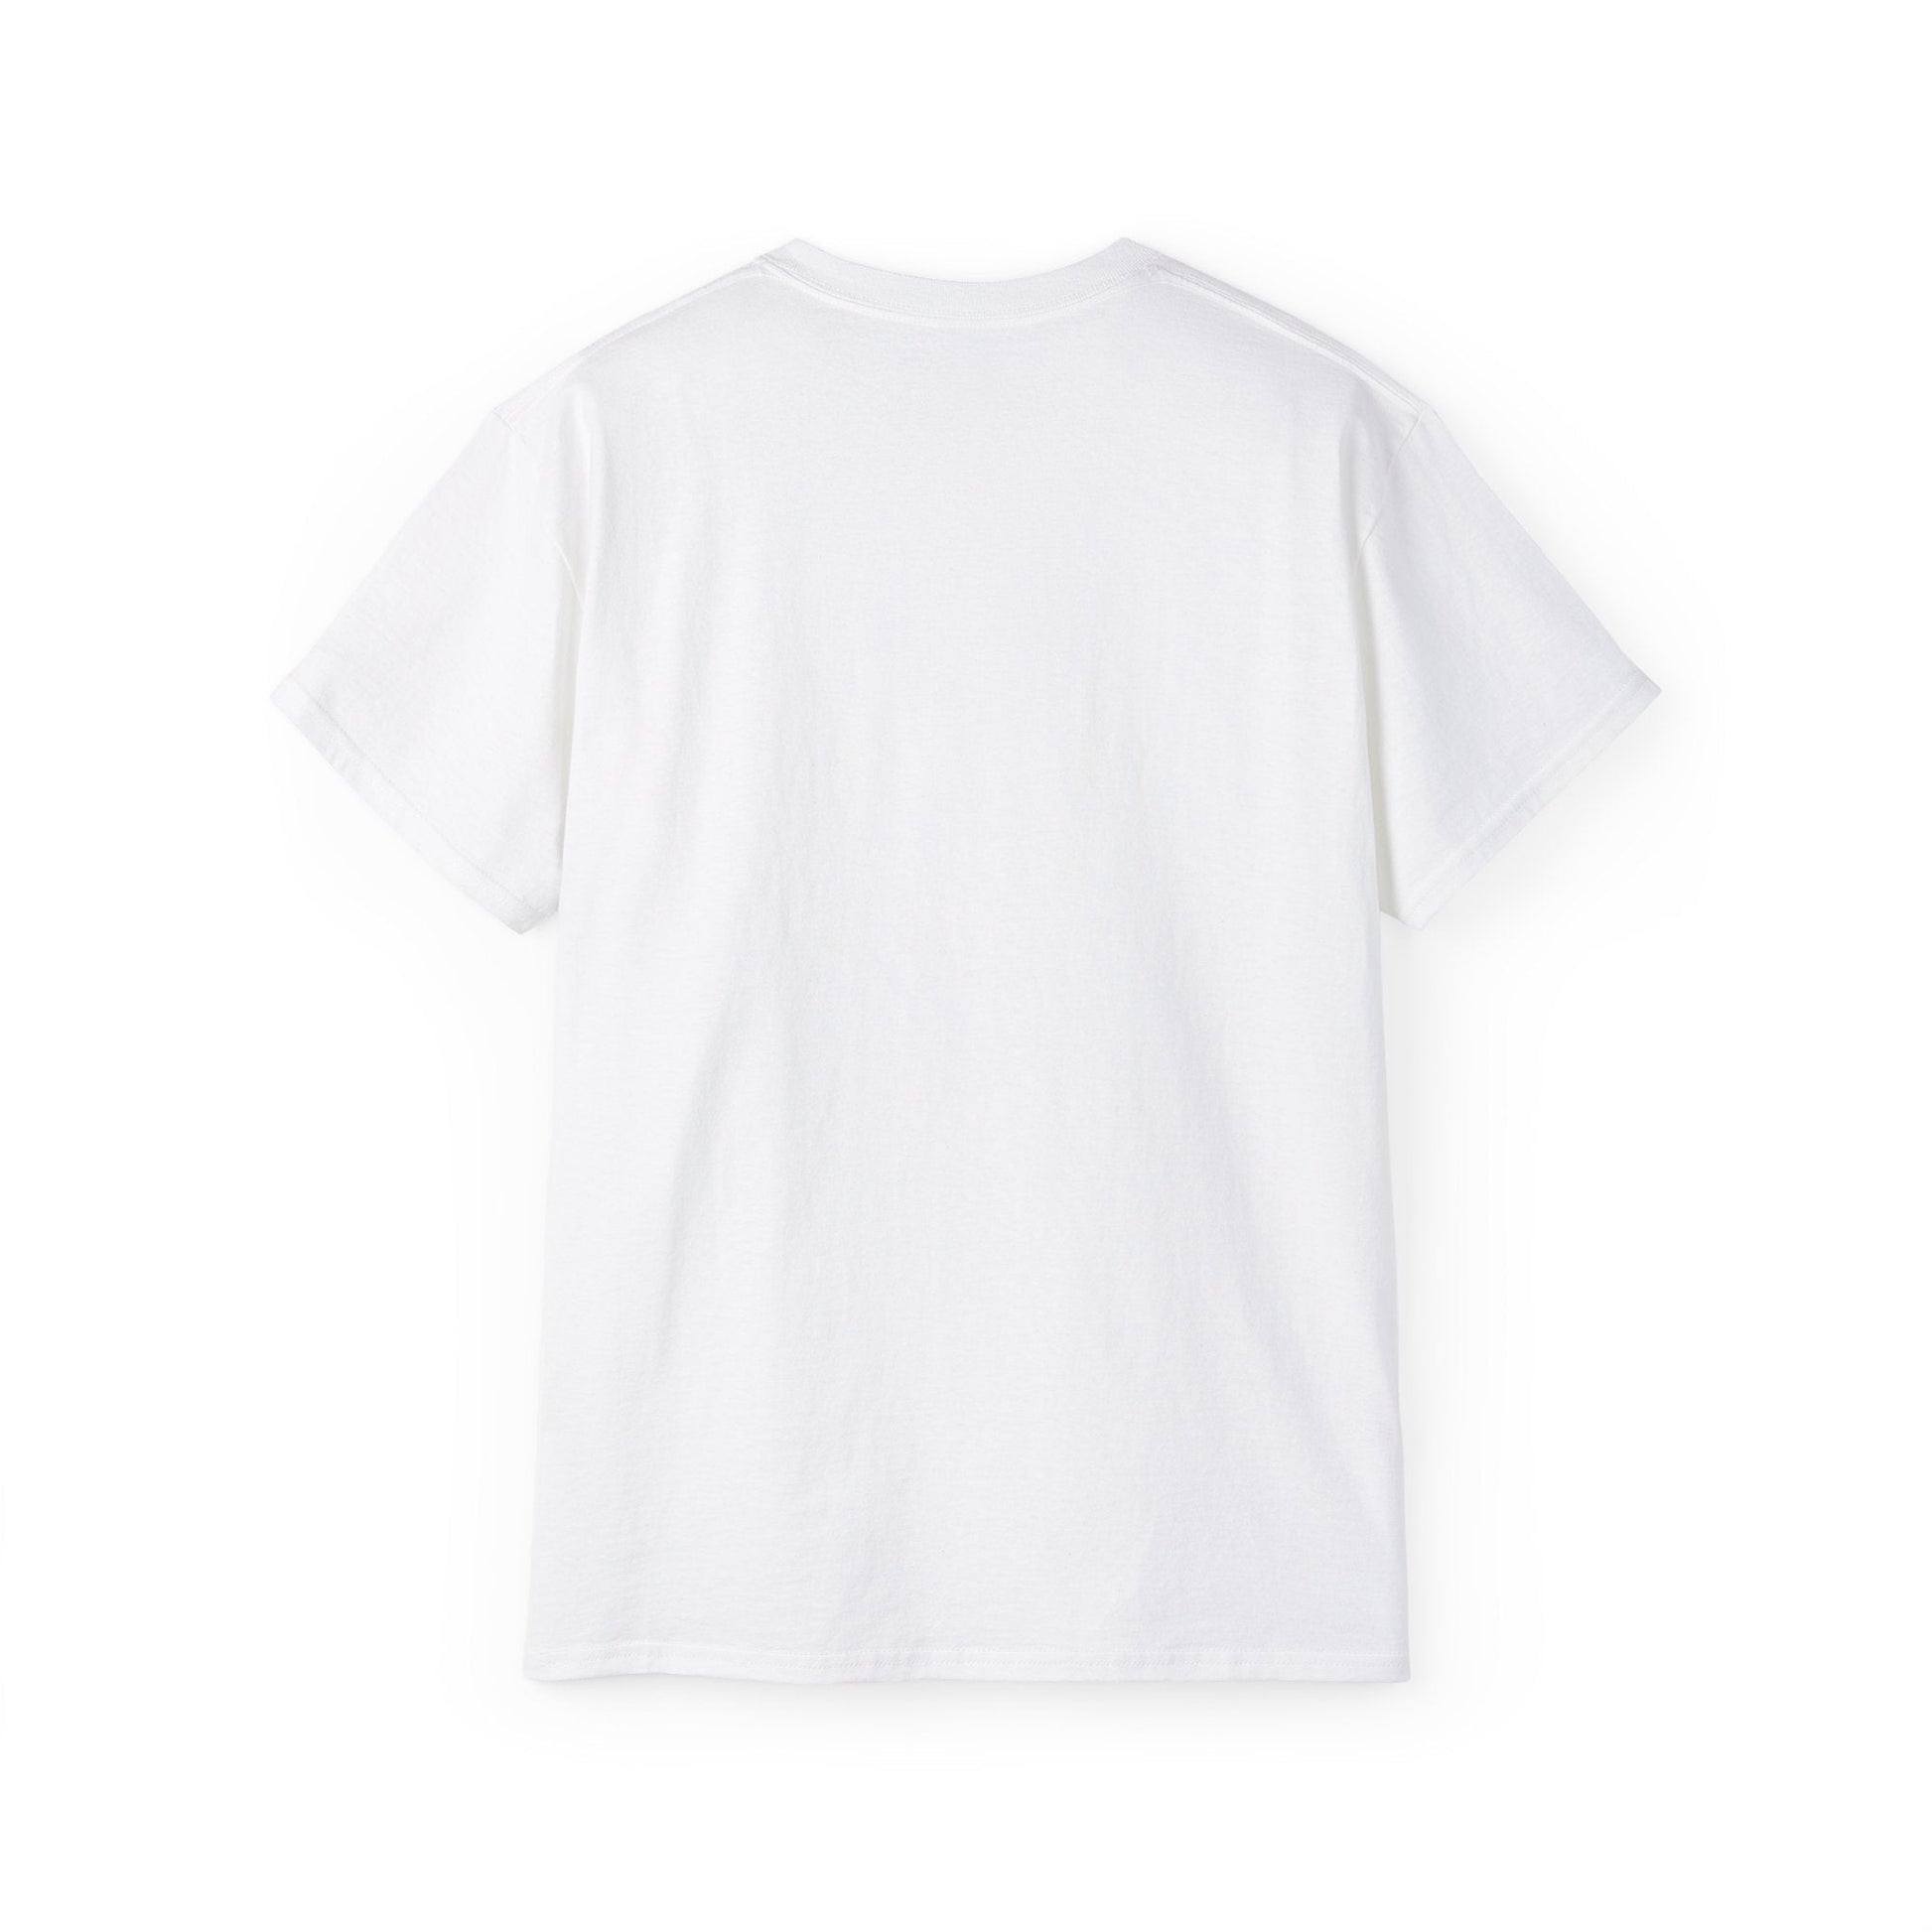 Help You Out Unisex Ultra Cotton Tee - T - Shirt - Epileptic Al’s Shop